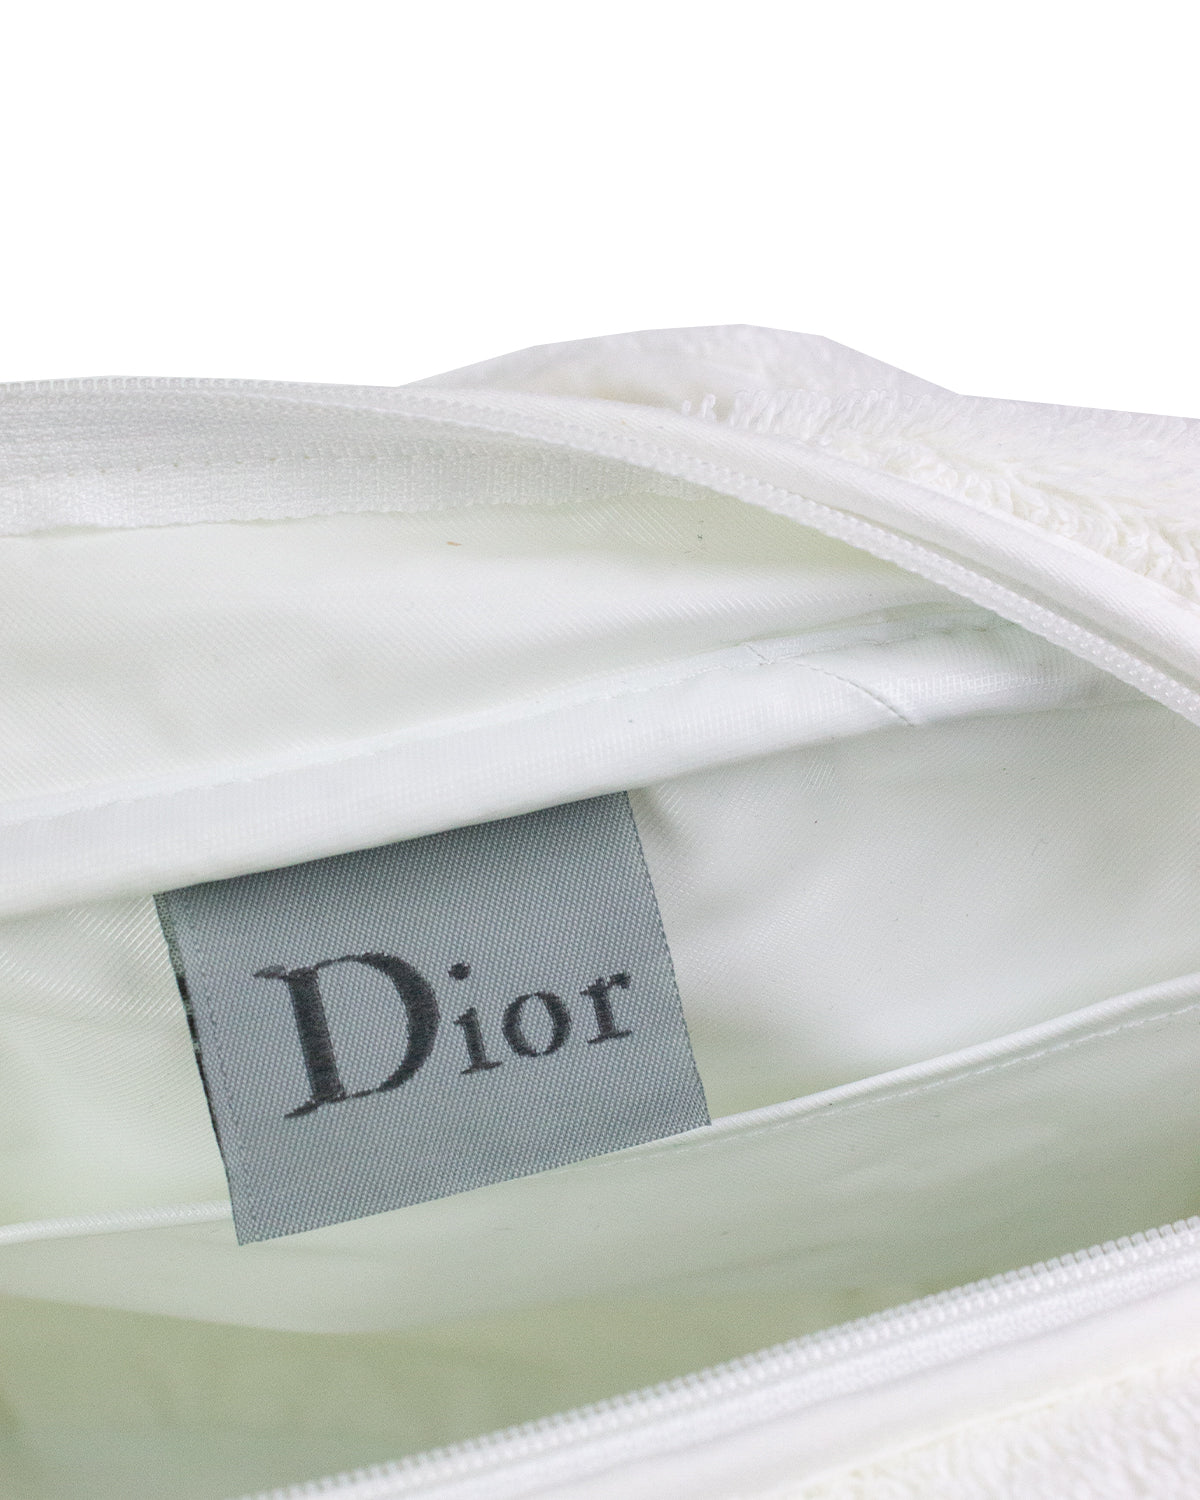 Dior - Authenticated Handbag - Cloth Grey for Women, Good Condition